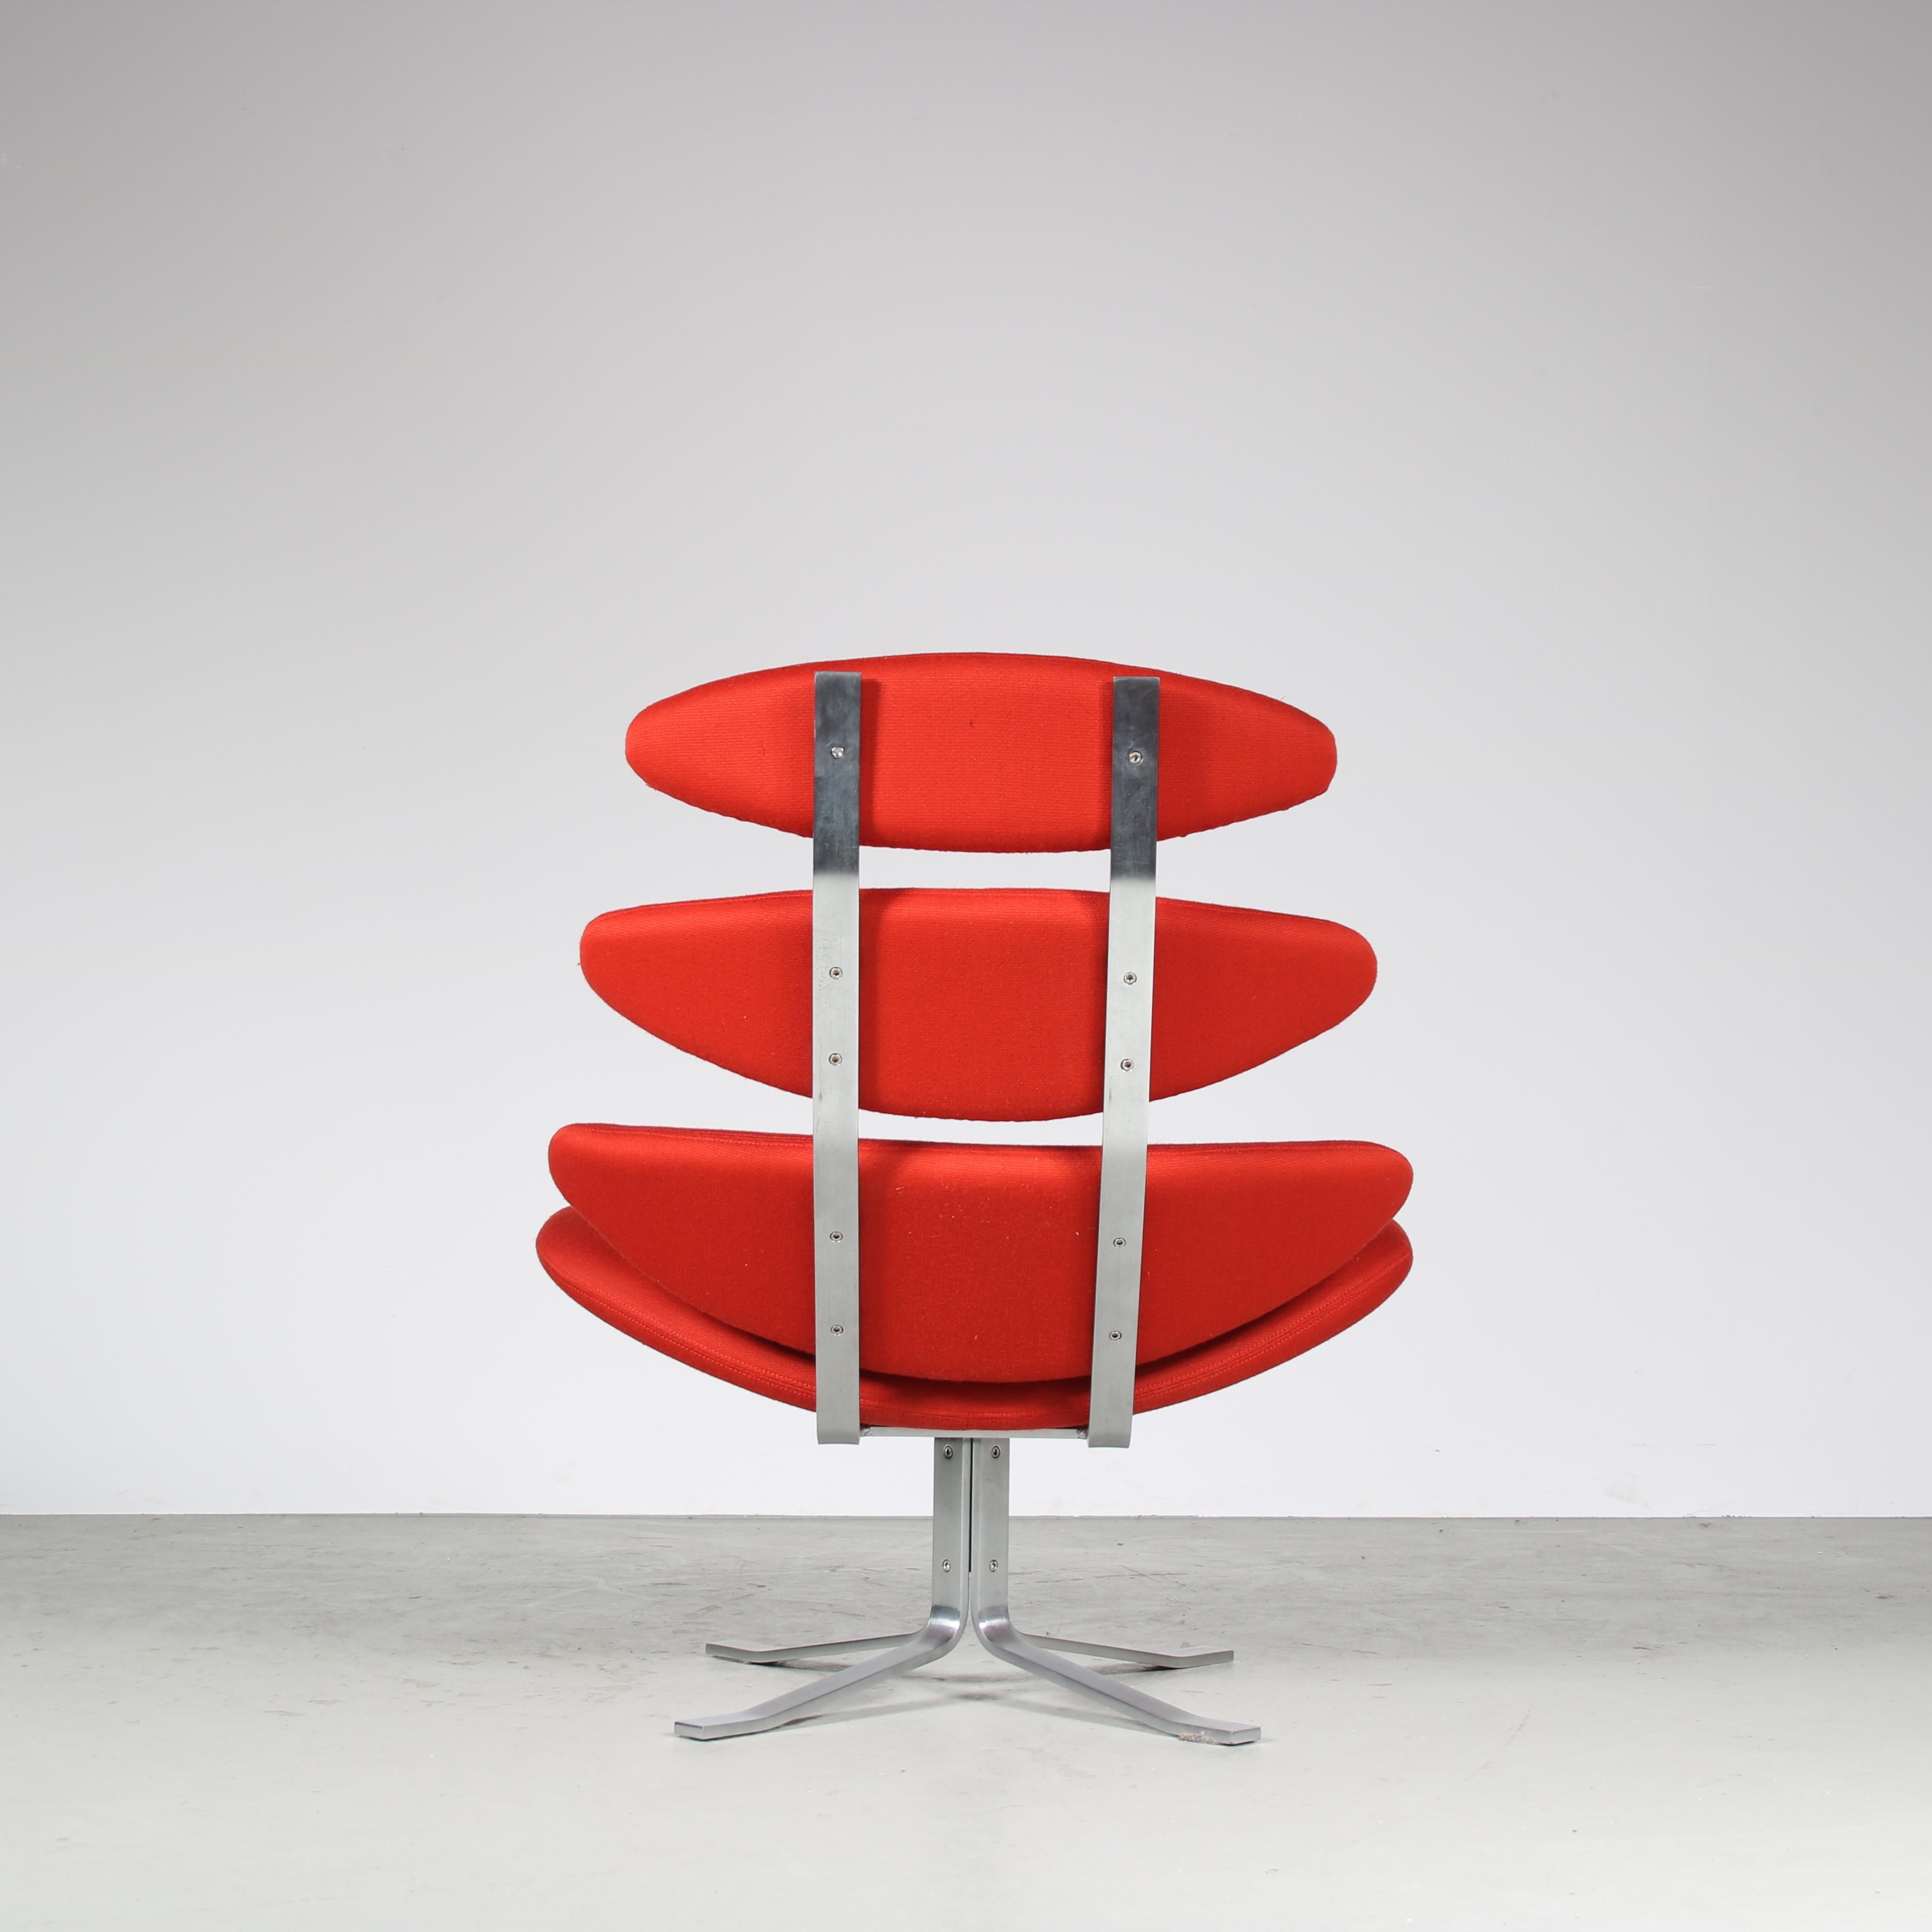 Mid-20th Century “Corona” Chair by Poul Volther for Erik Jørgensen Møbelfabrik, Denmark 1960 For Sale